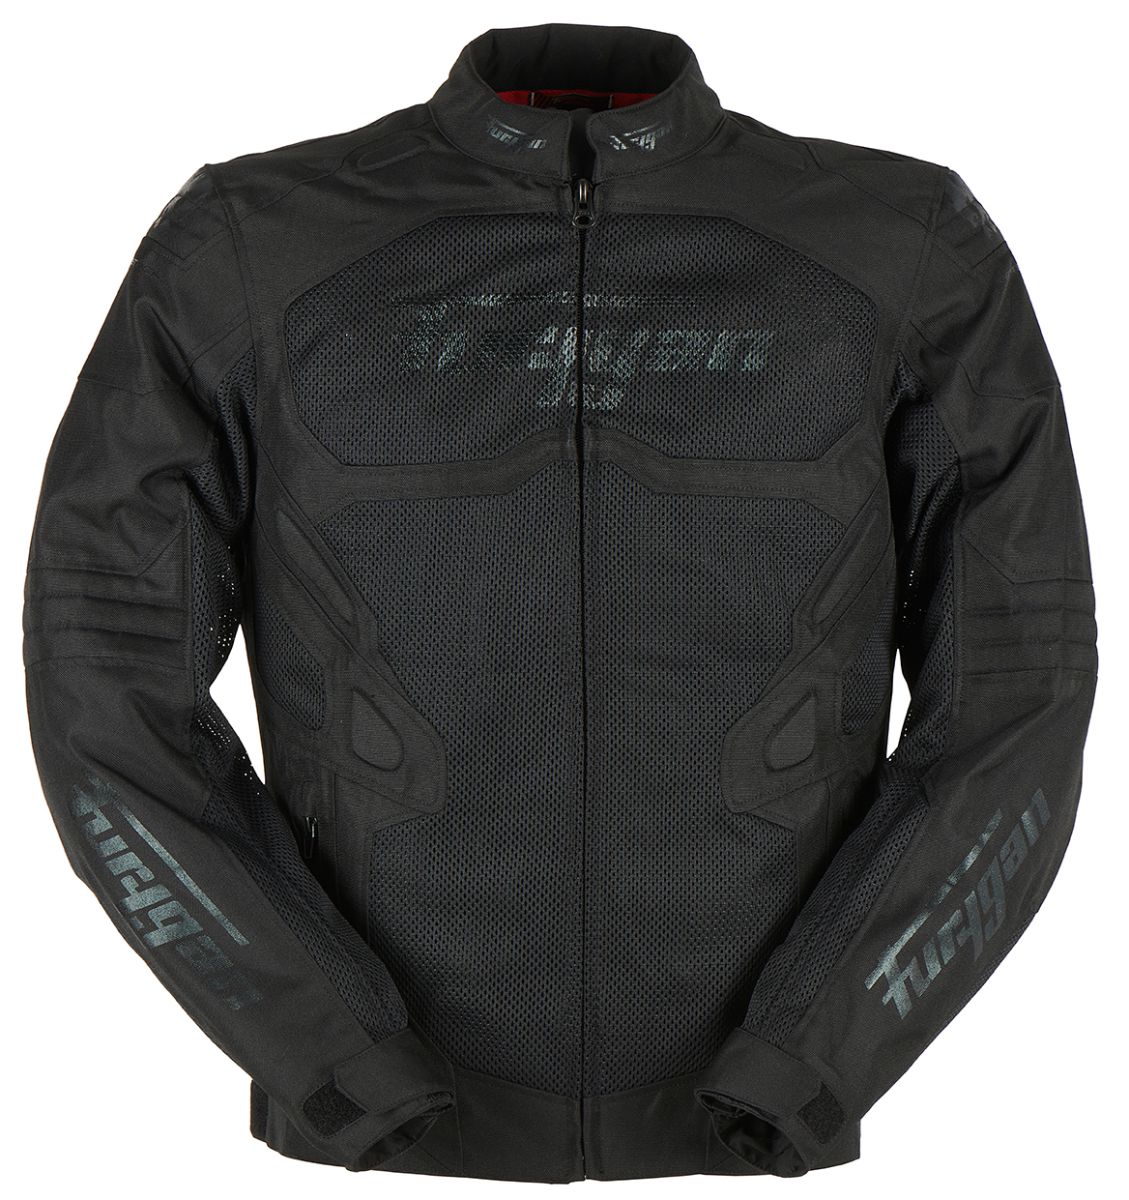 Image of Furygan Atom Vented Evo Jacket Black Size L EN